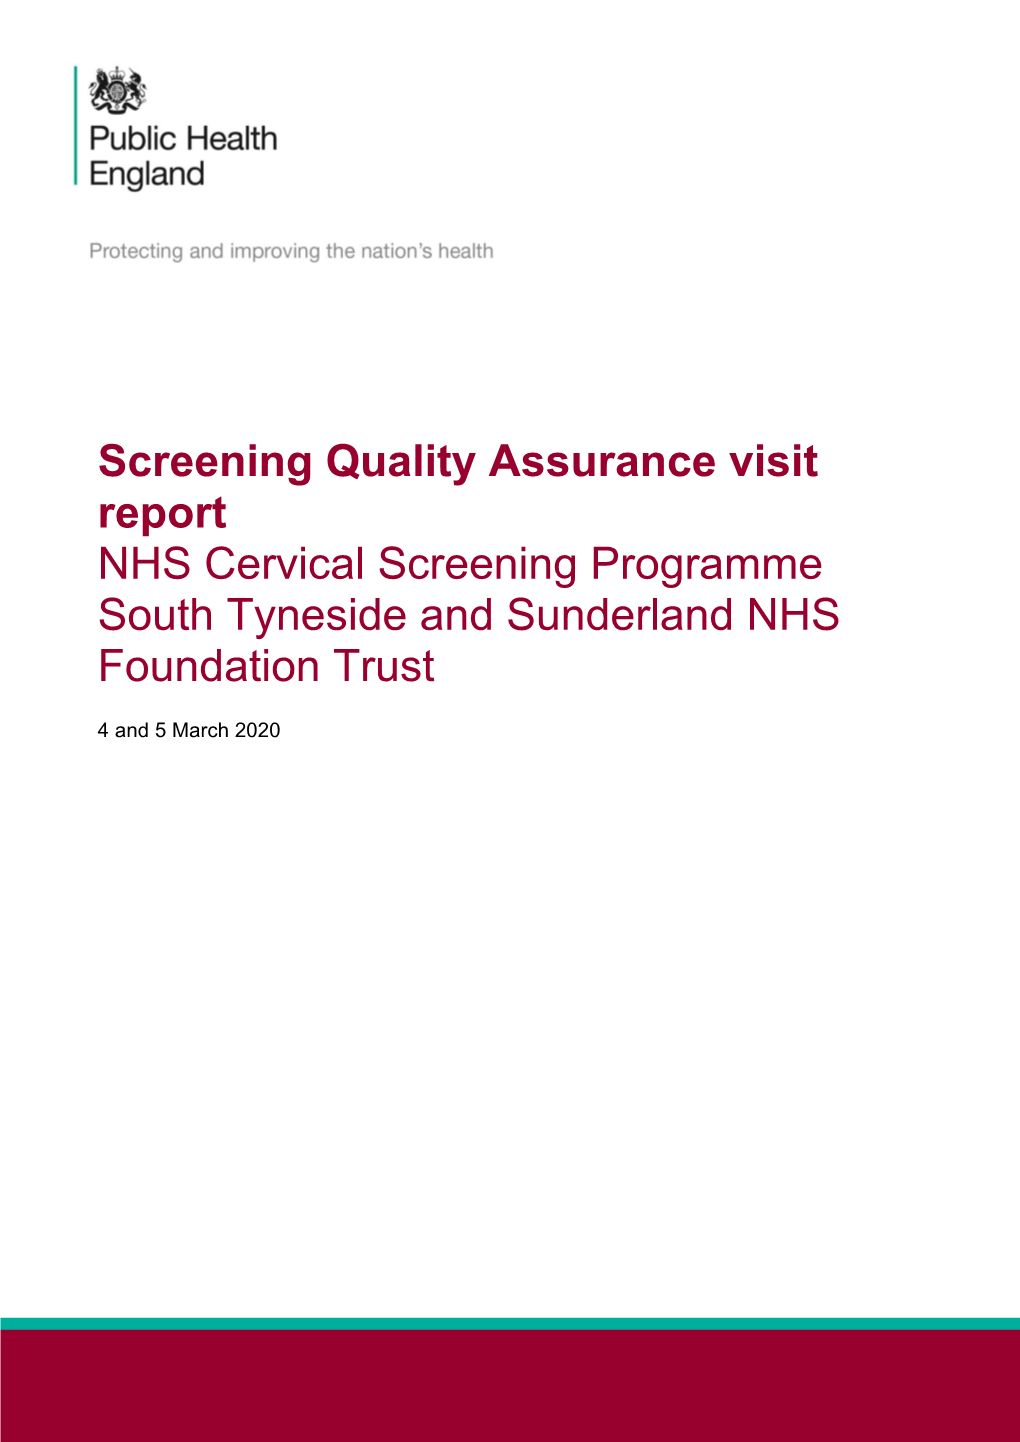 South Tyneside and Sunderland NHS Foundation Trust Cervical Screening Programme